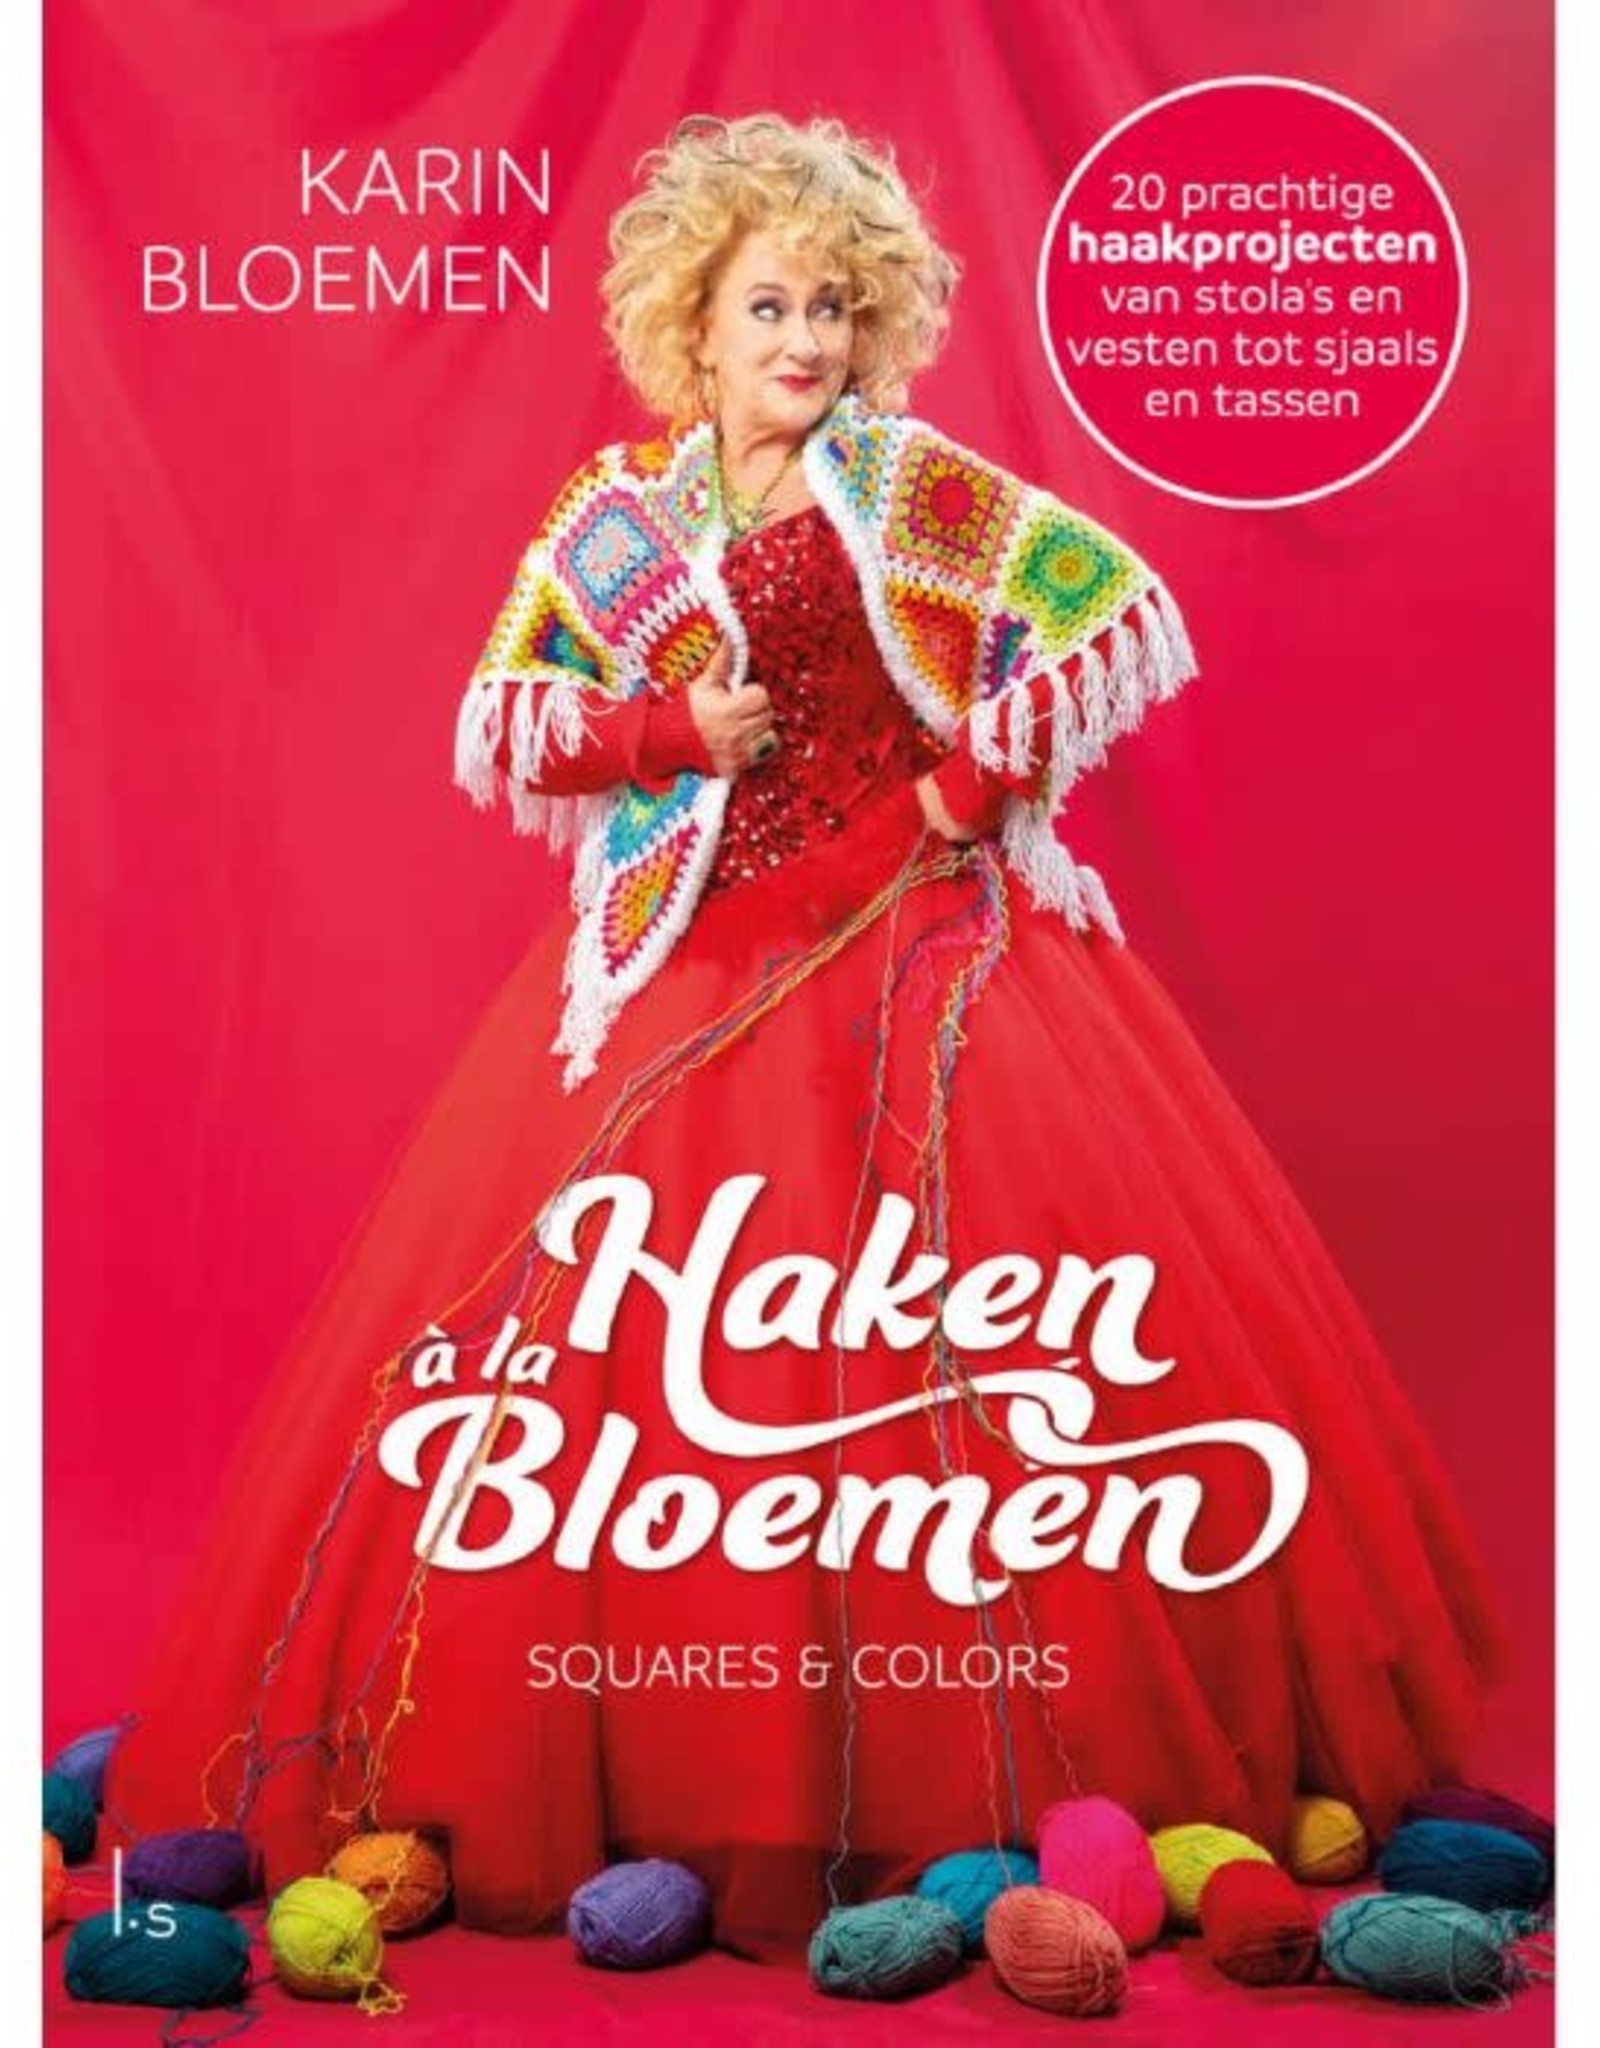 Copy of Haken a la bloemen: Granny squares